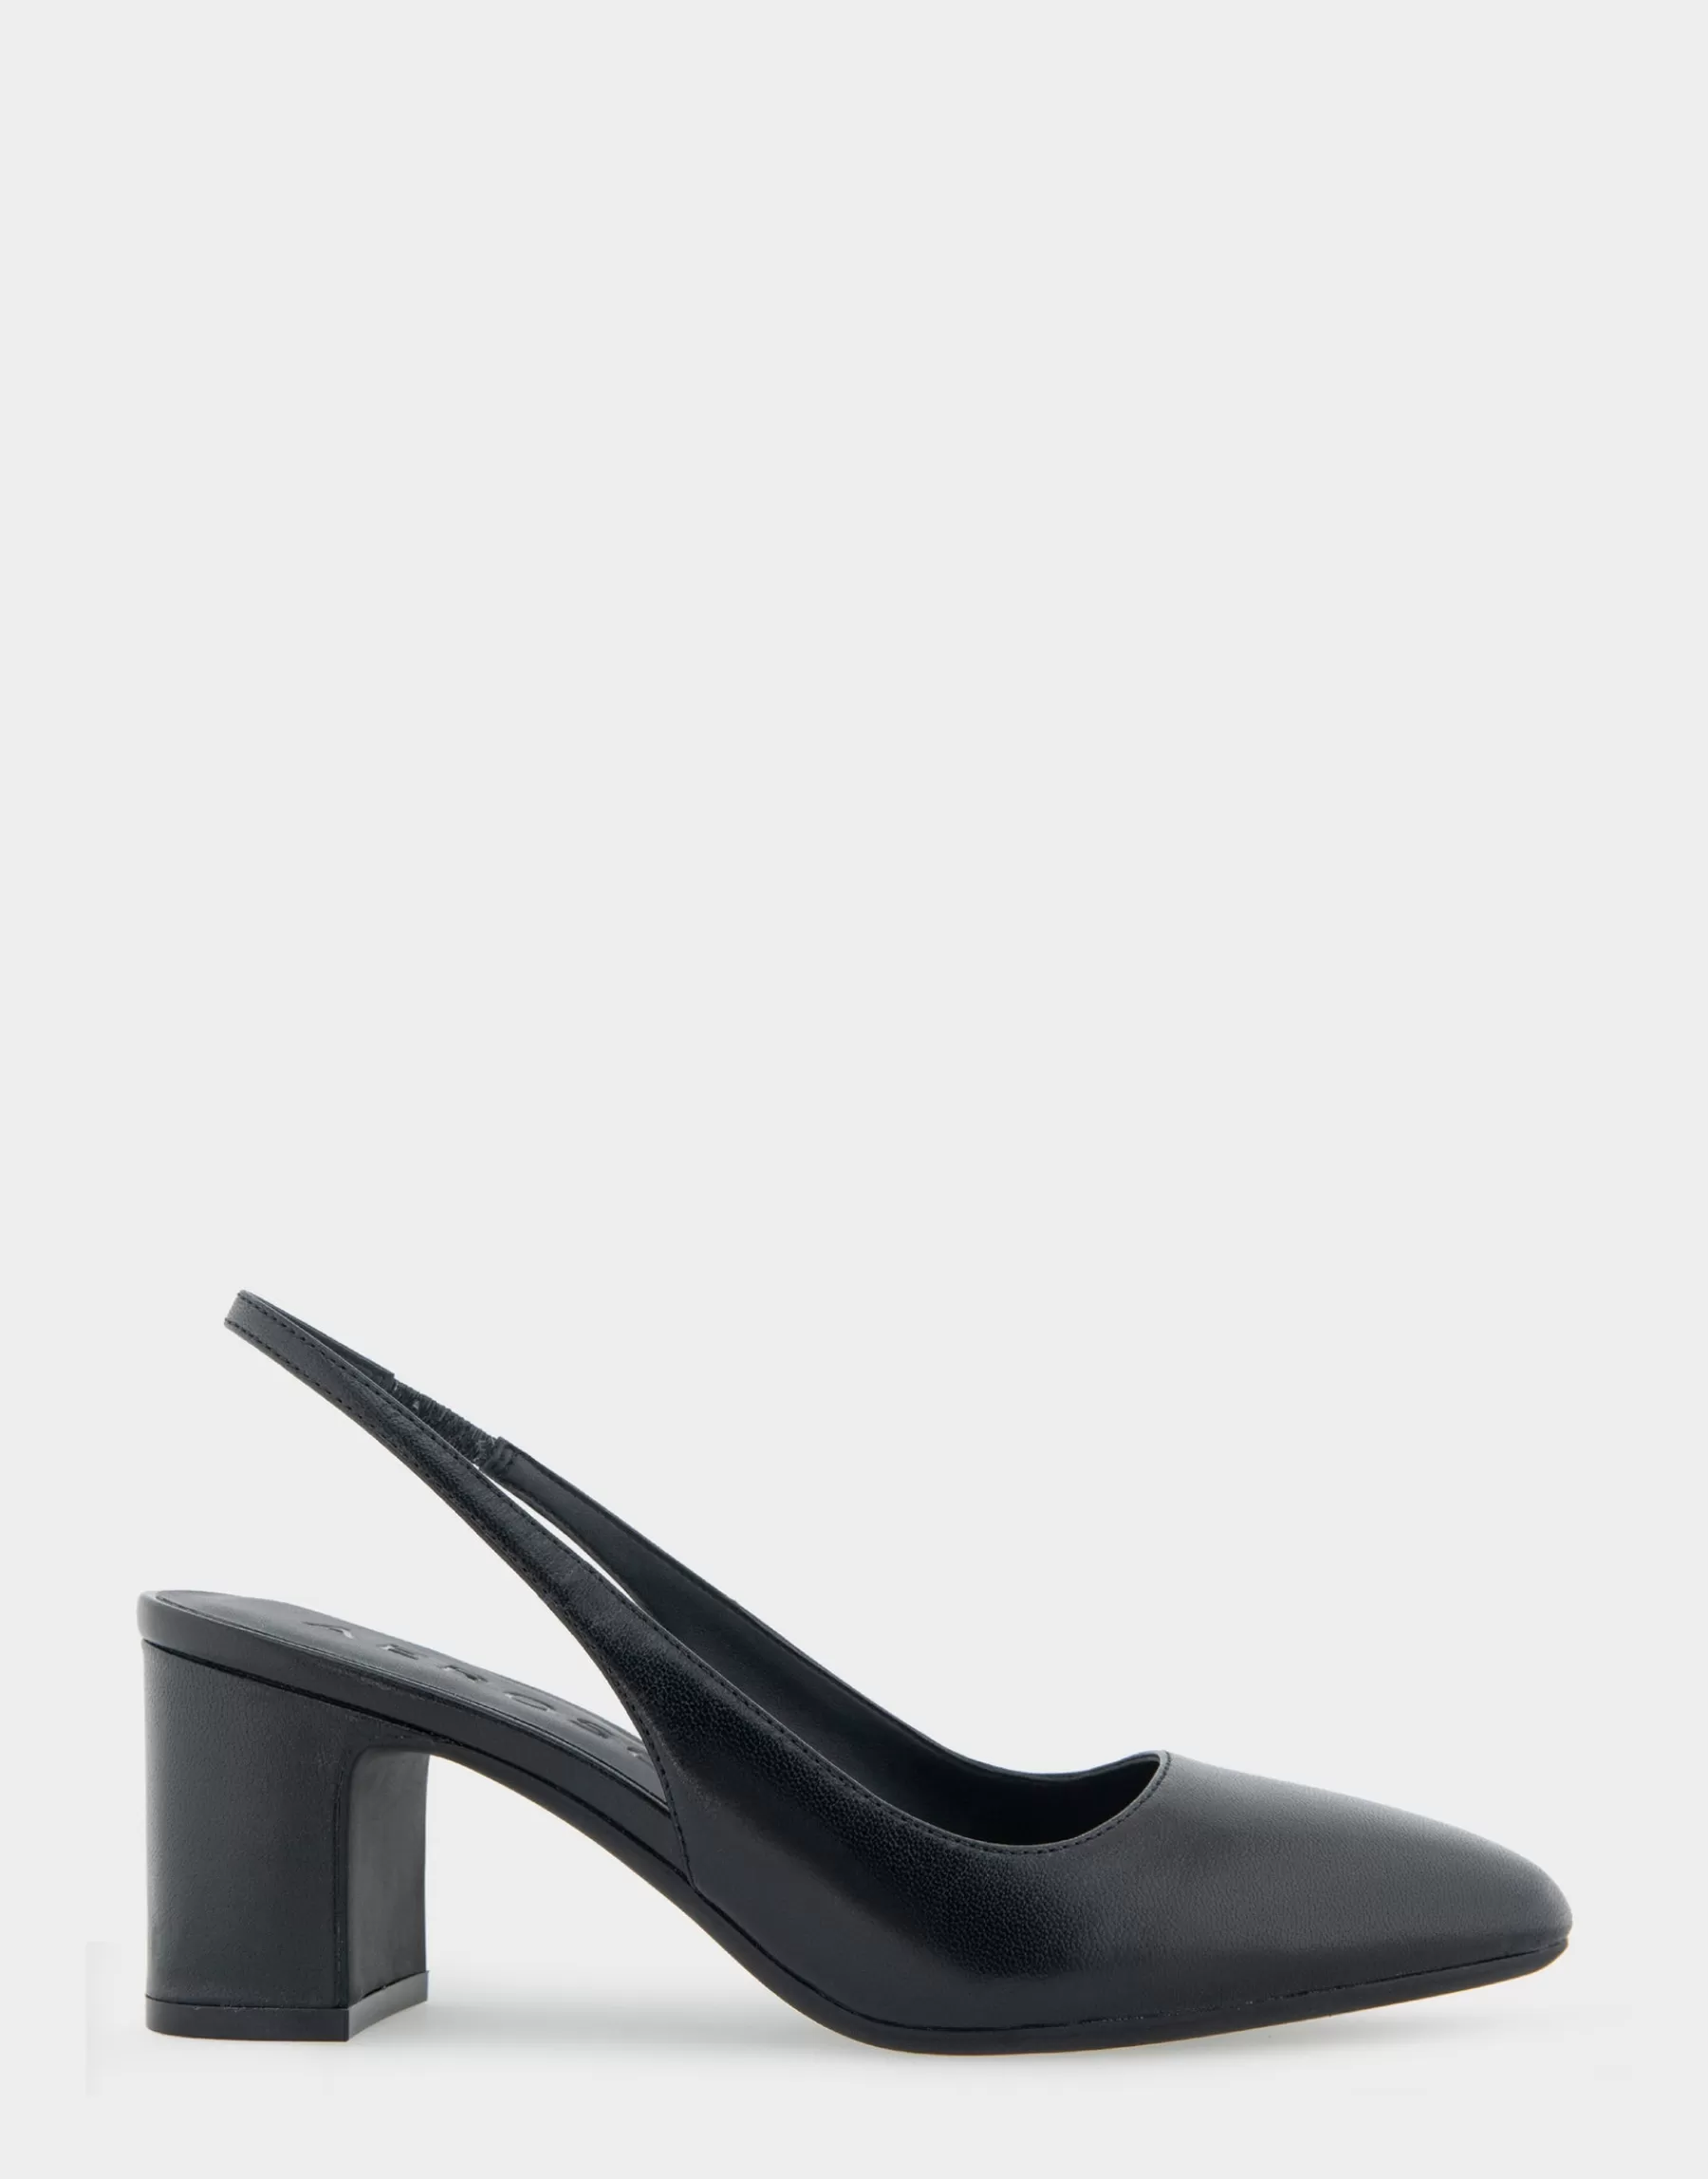 Aerosoles Comfortable Women's Slingback Mid-heel Pump in Black Leather New